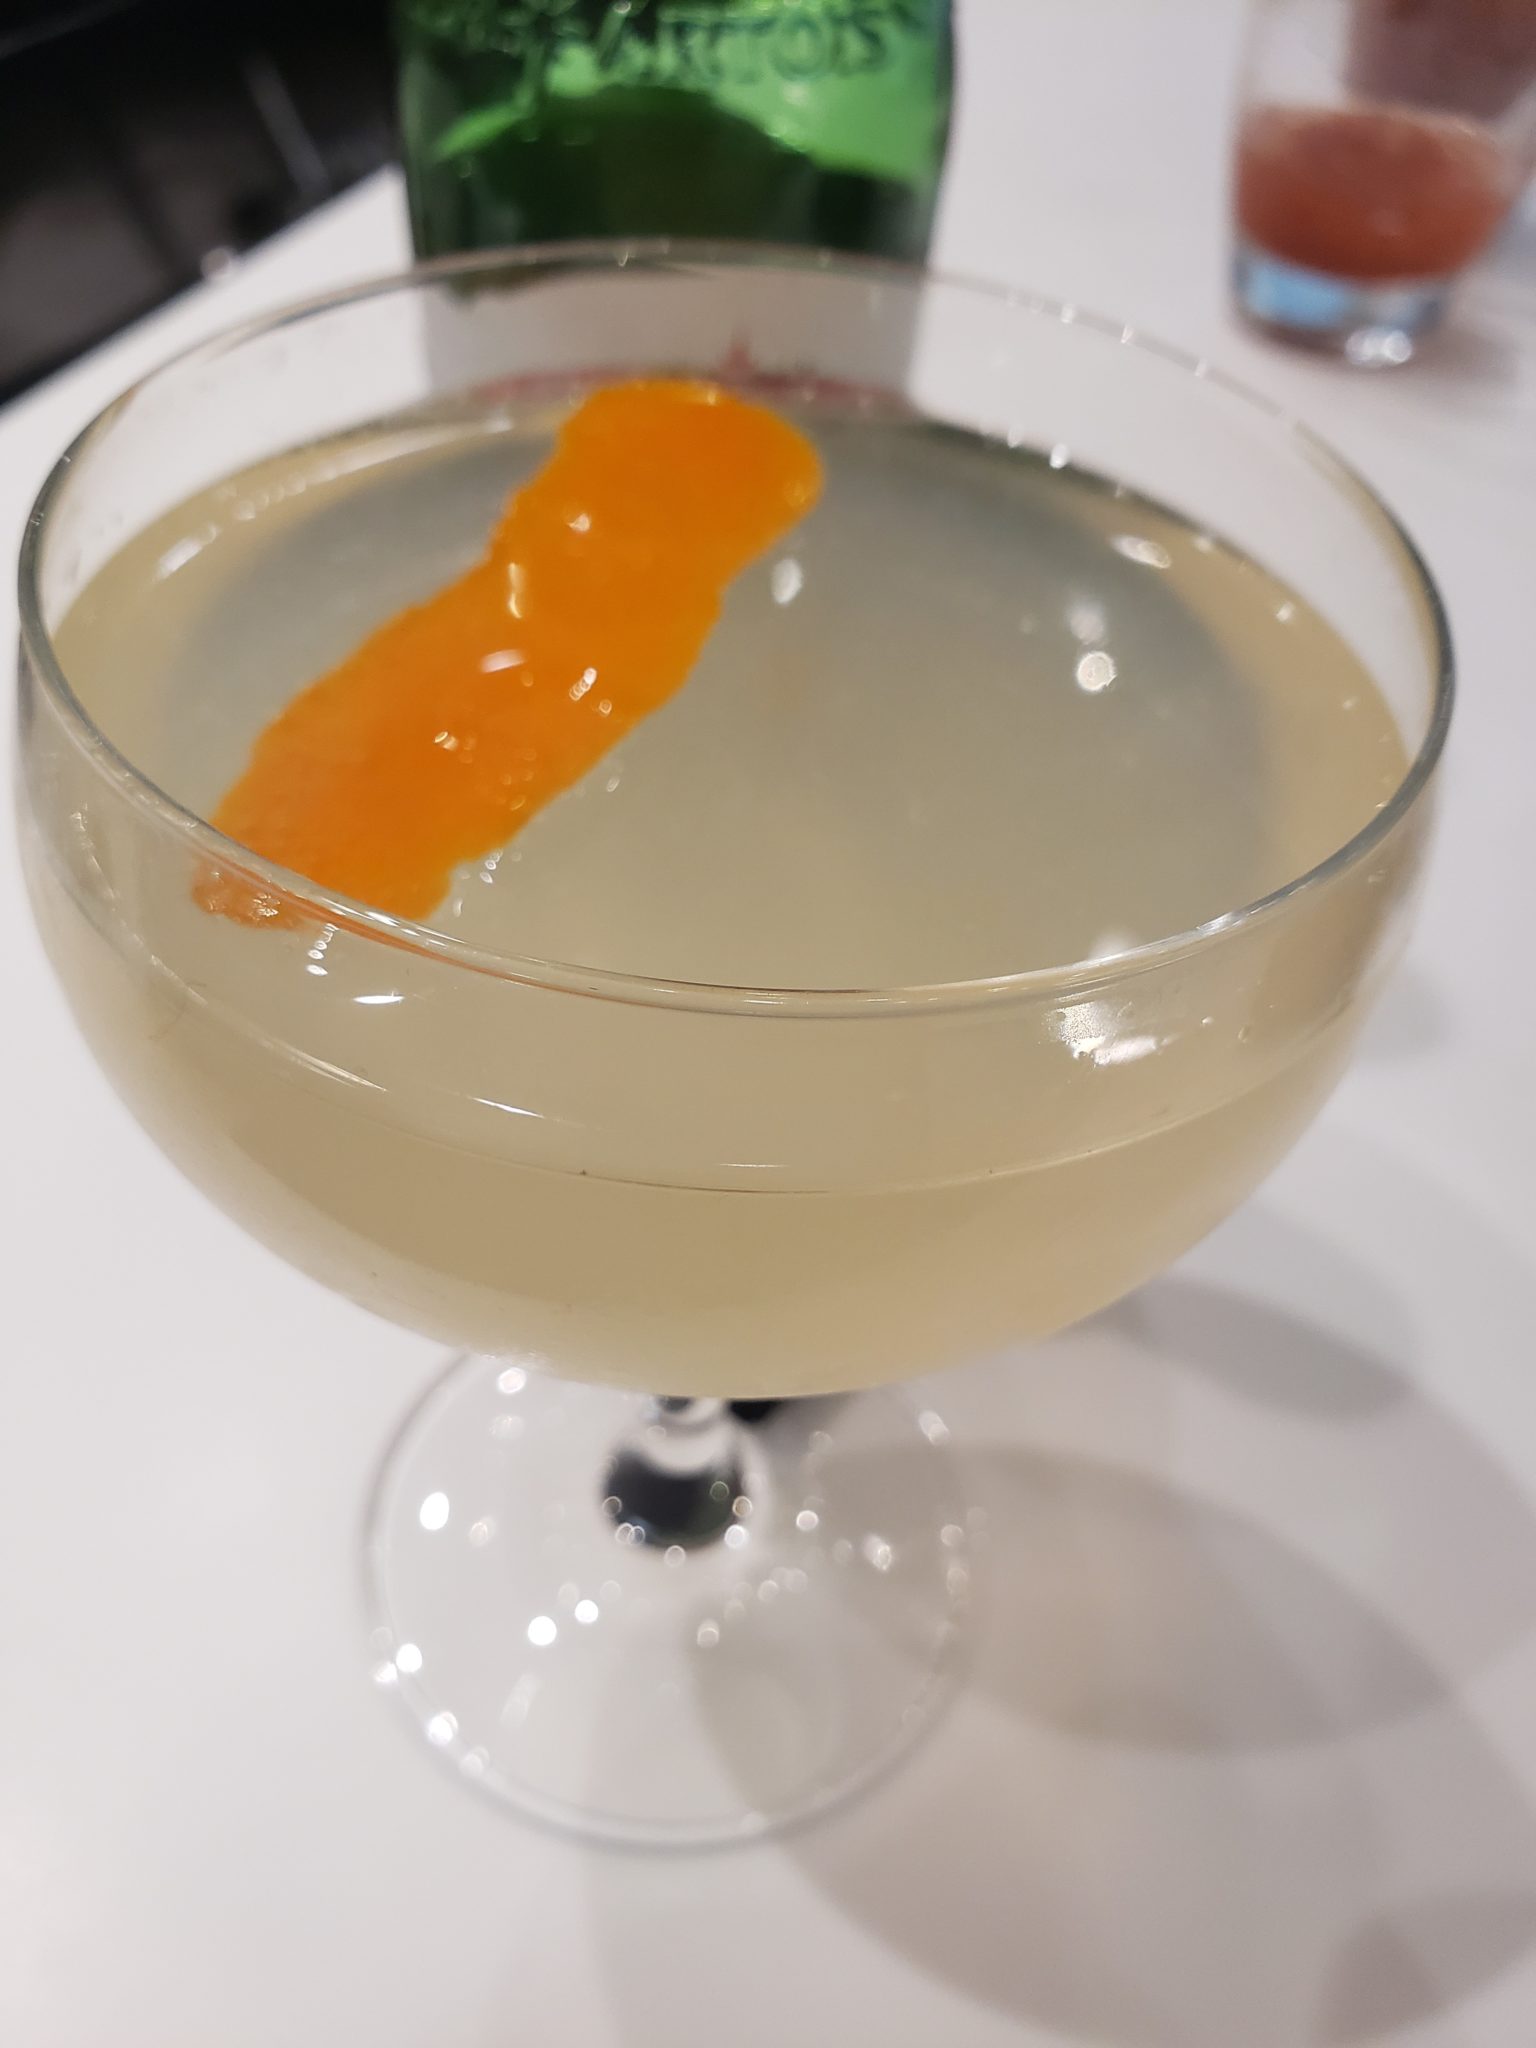 a glass of liquid with an orange peel